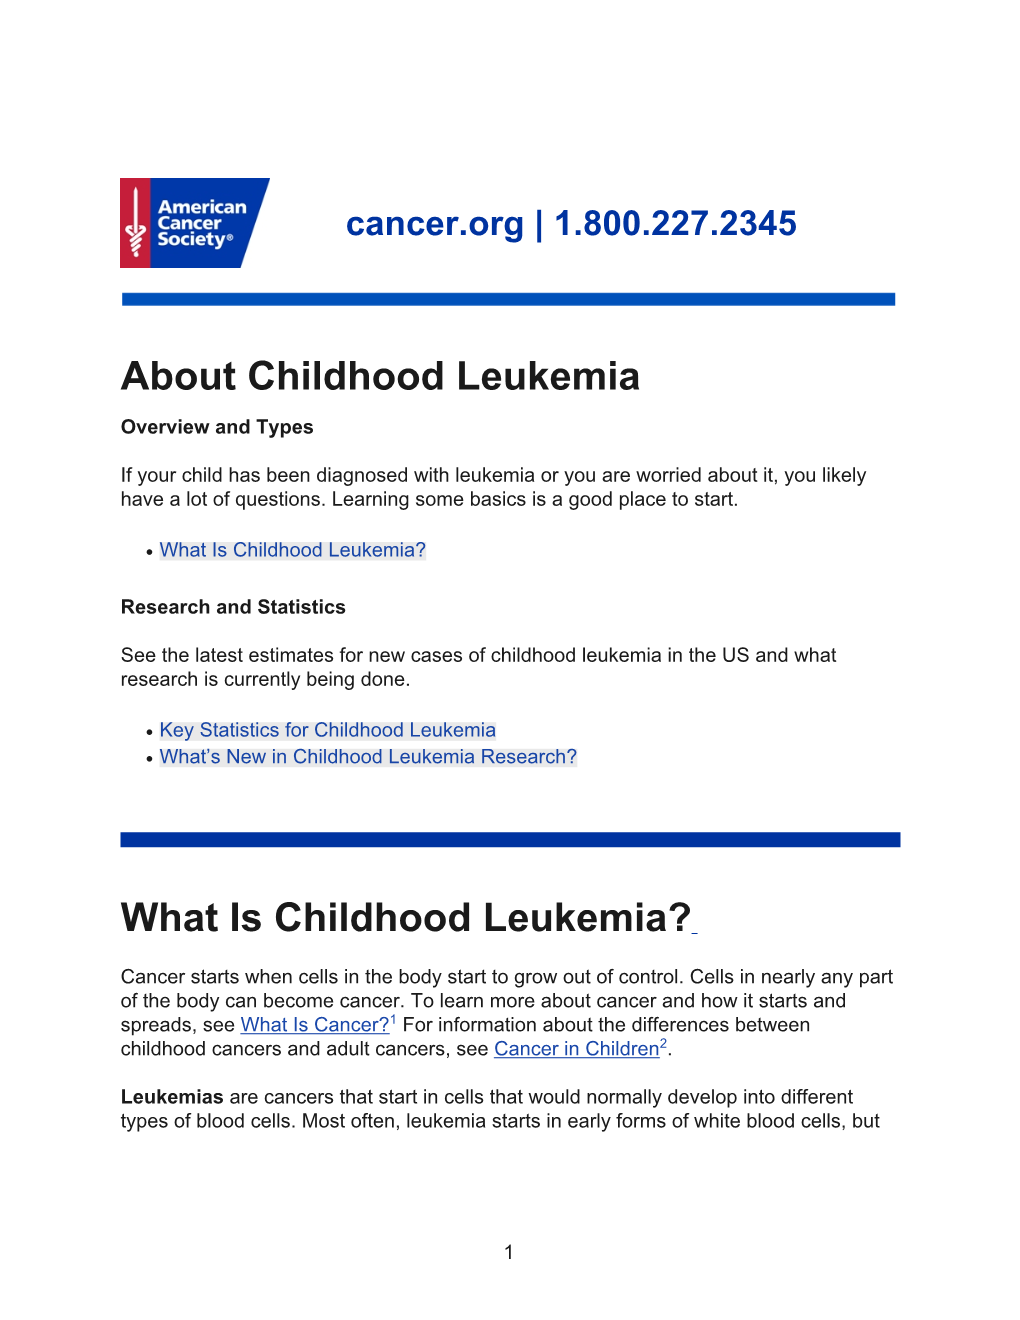 What Is Childhood Leukemia?